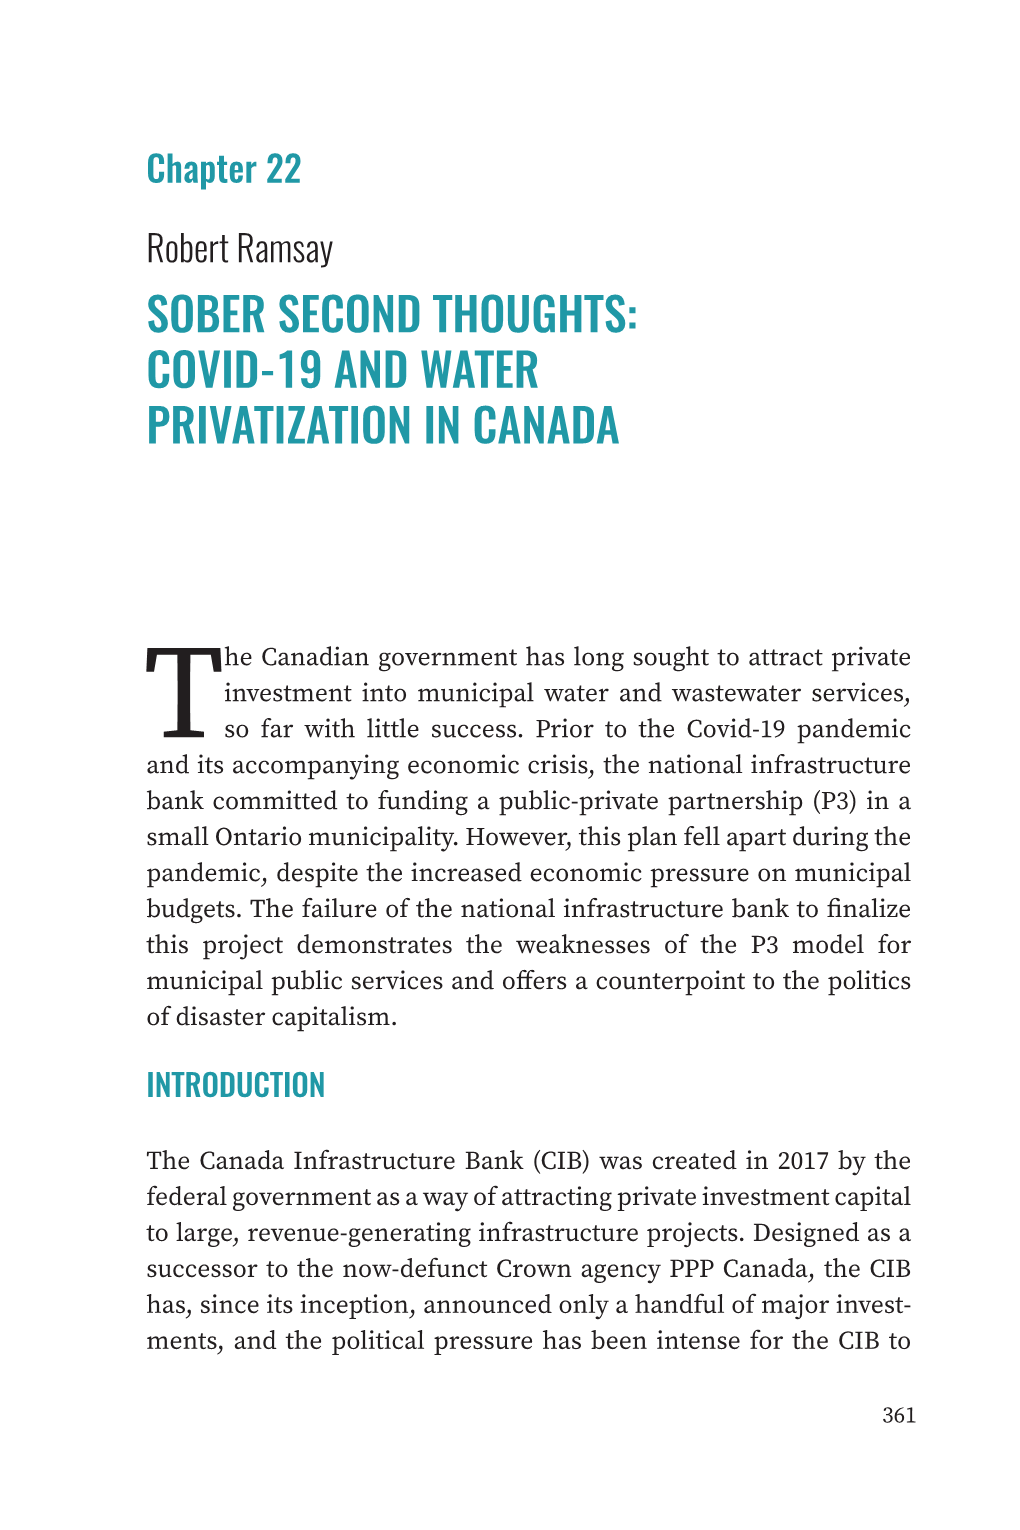 Covid-19 and Water Privatization in Canada